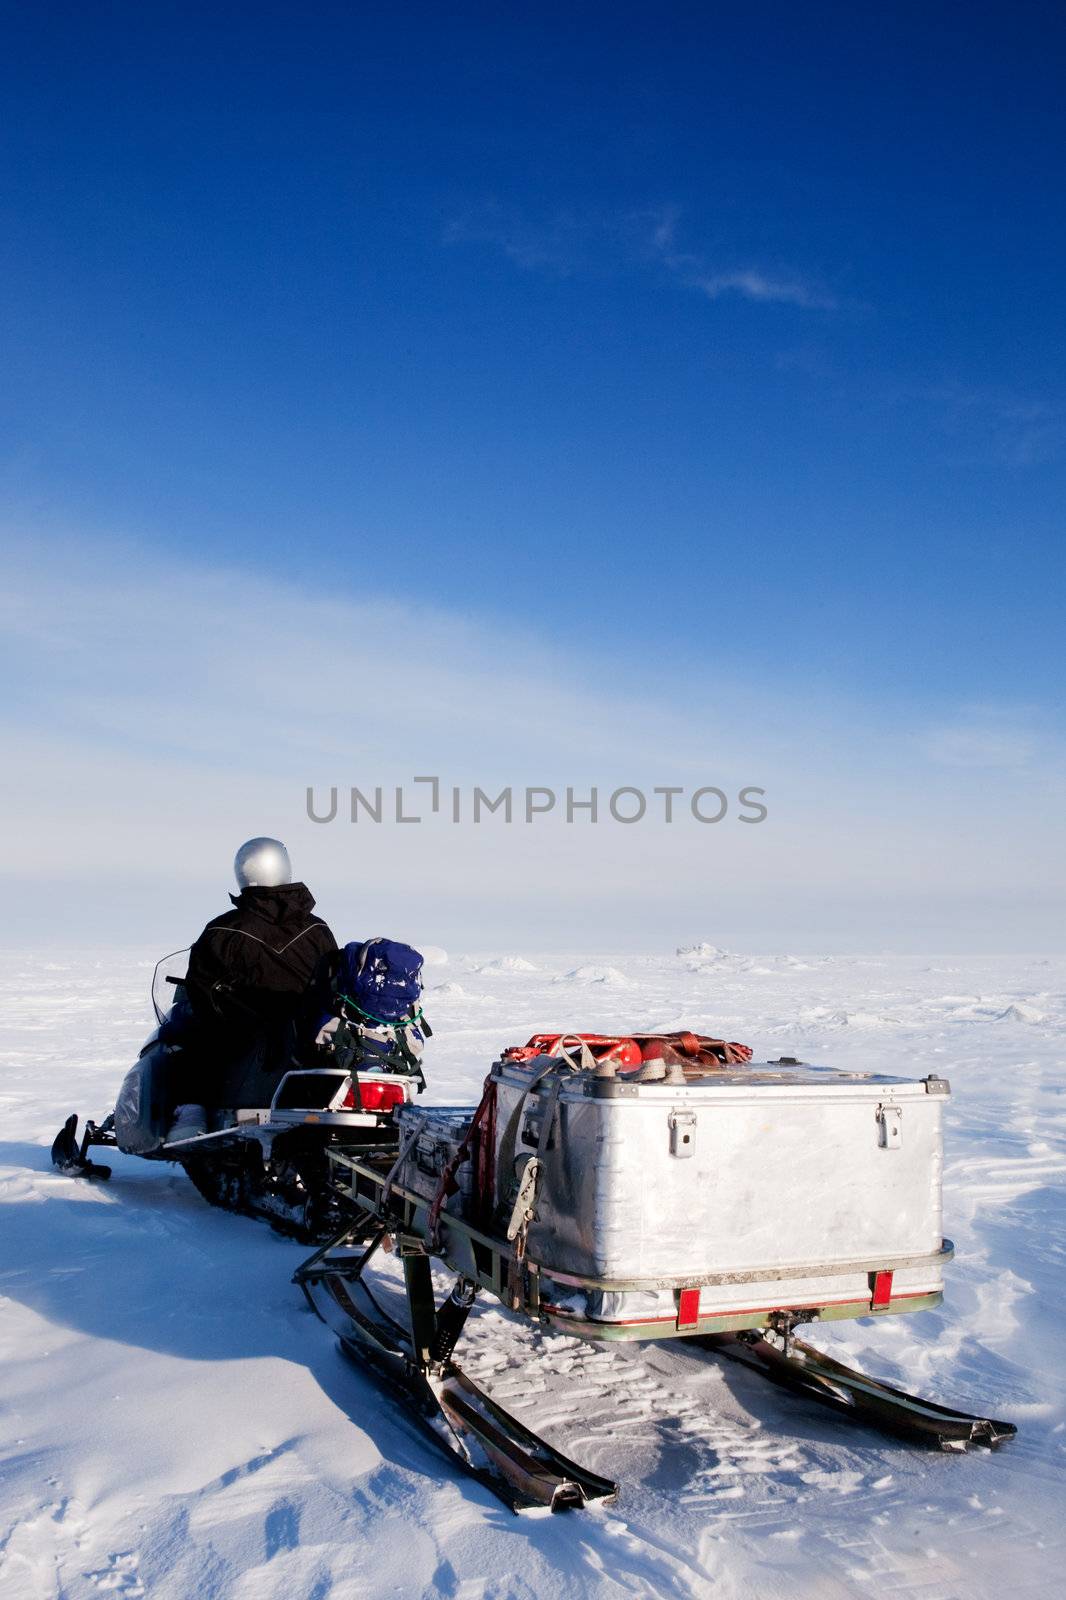 A man sitting on a snowmobile on a barren snow landscape